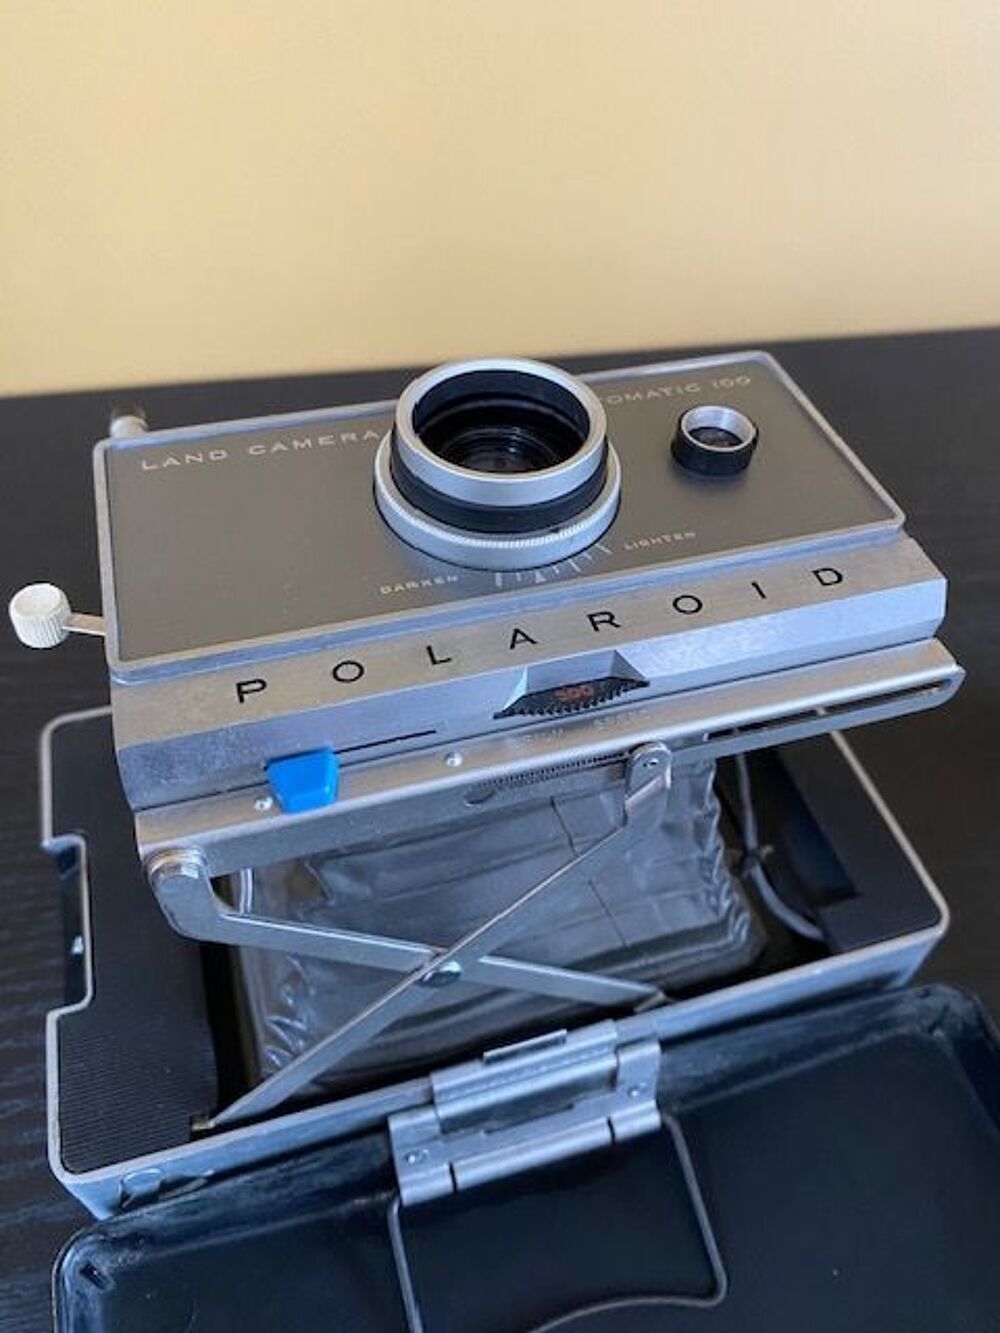 Polaroid Automatic 100 Photos/Video/TV